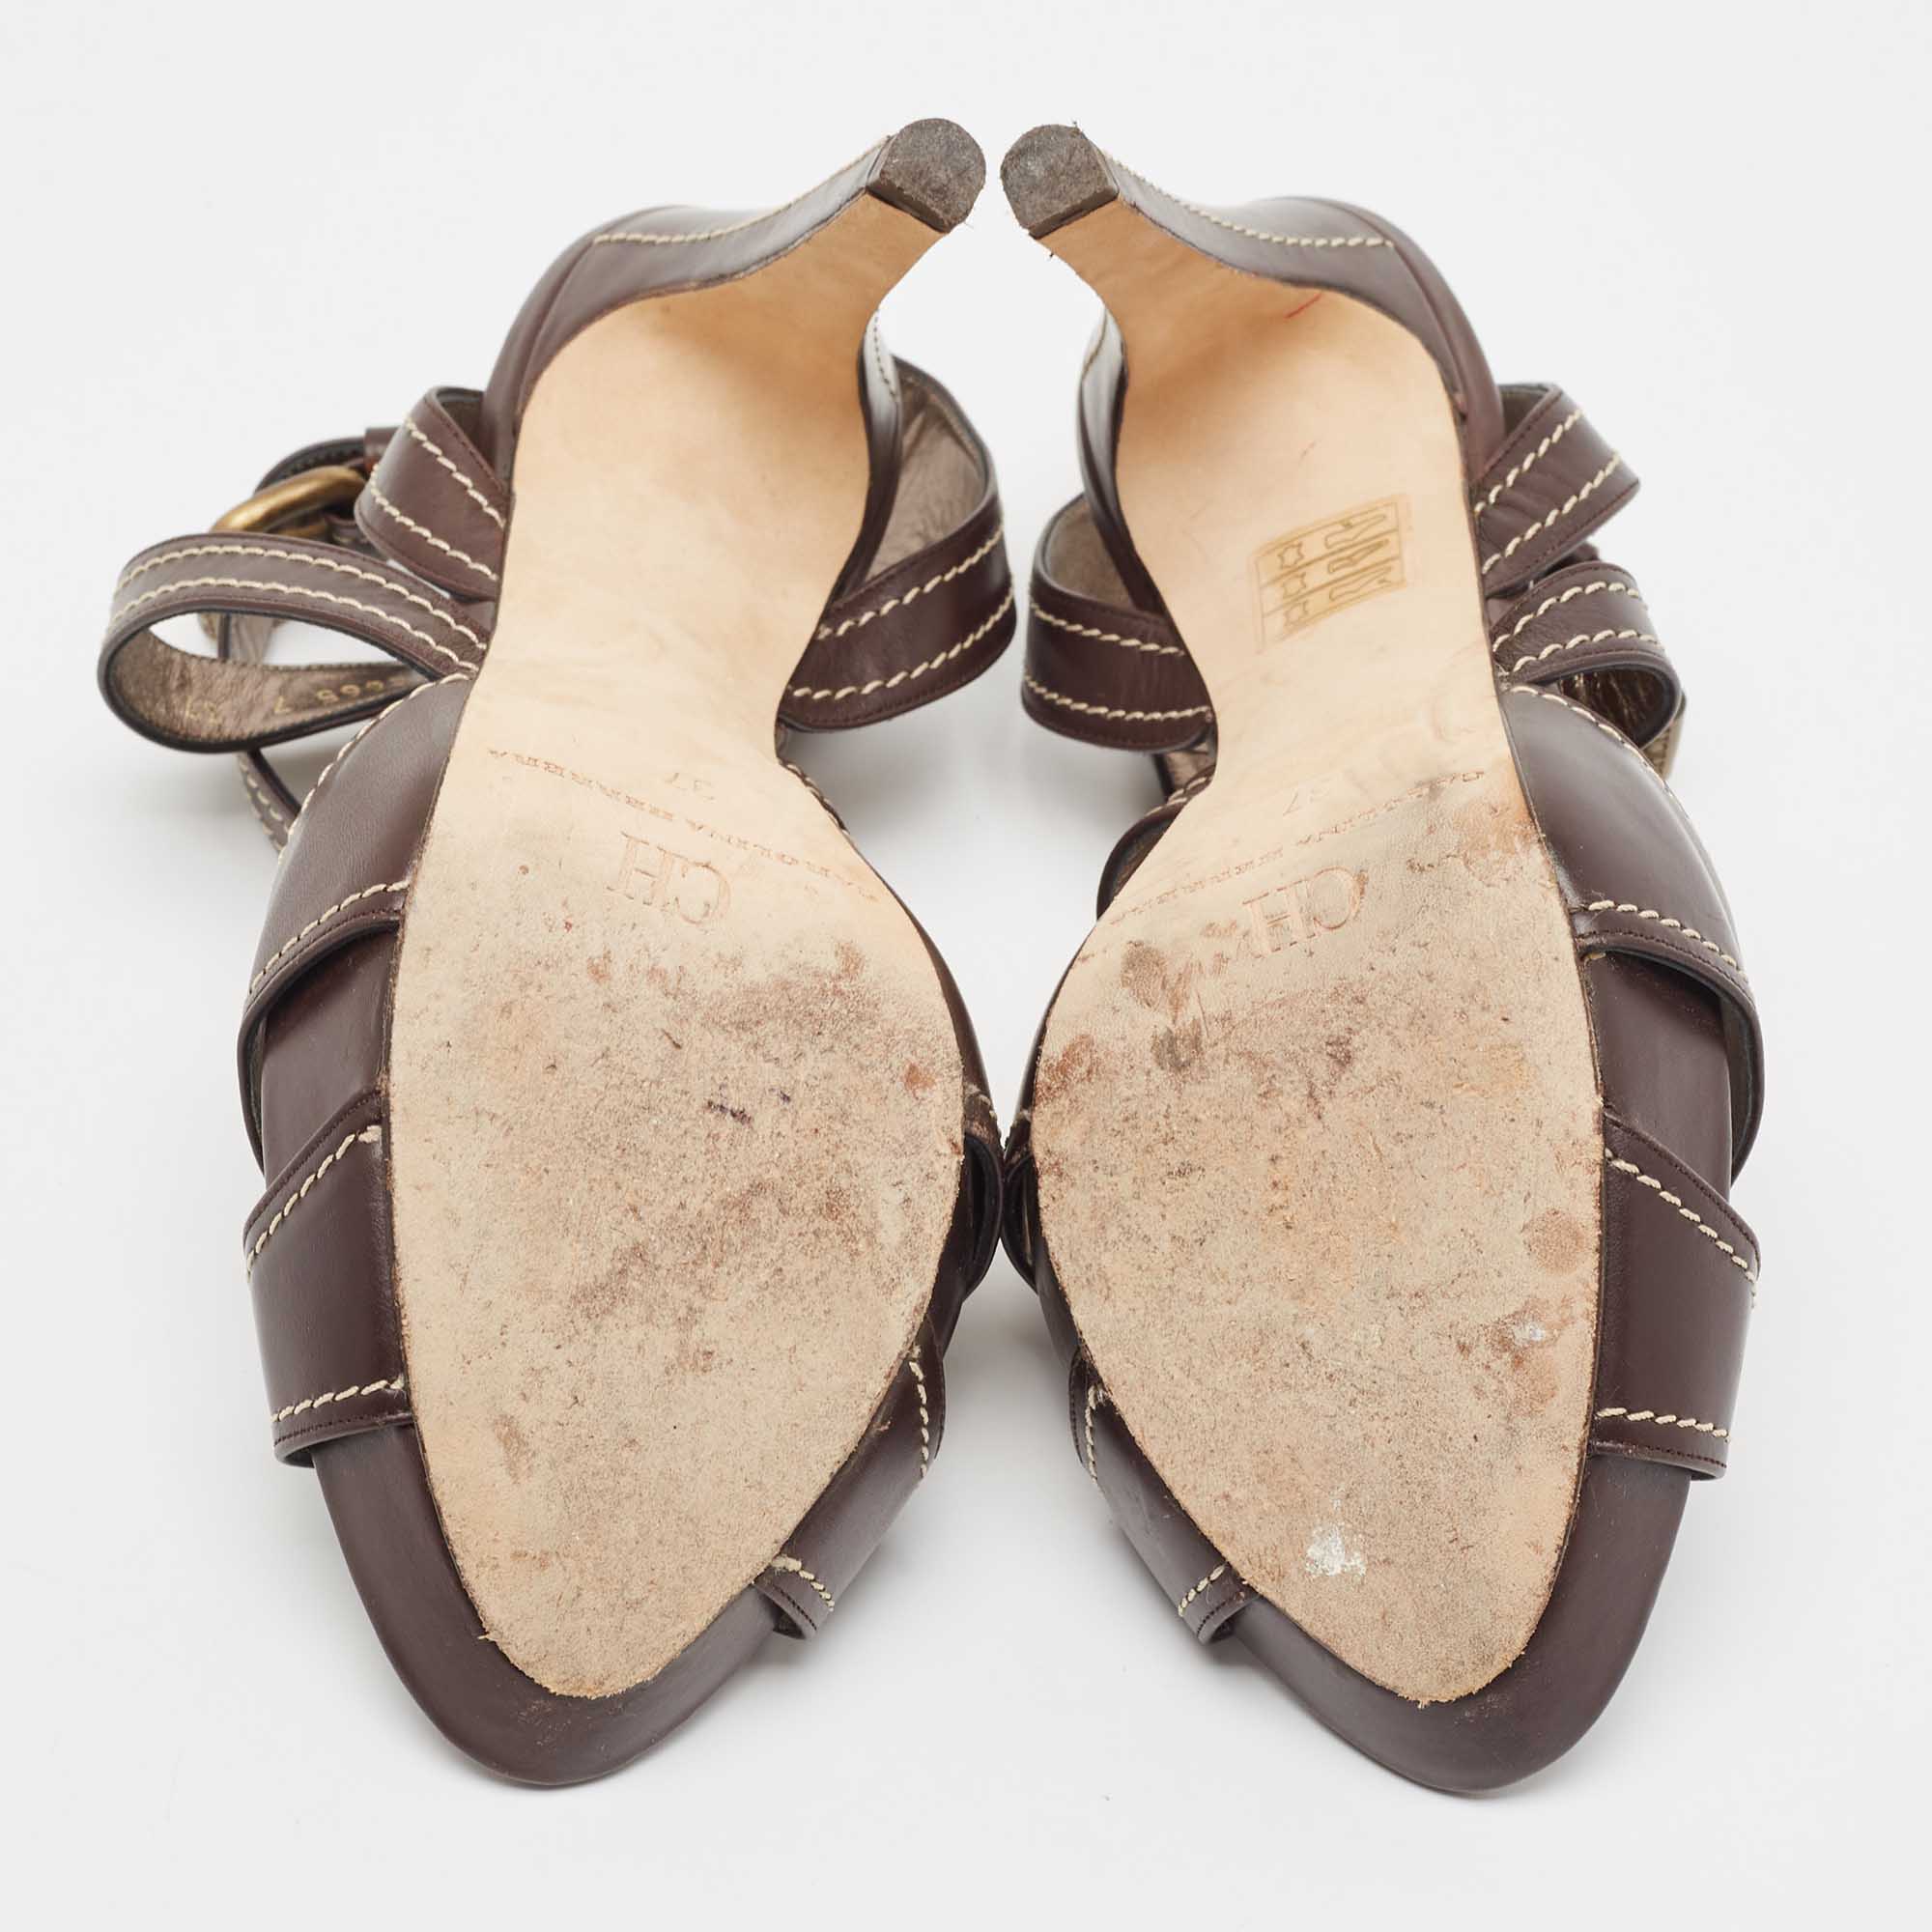 CH Carolina Herrera Brown Leather Strappy Sandals Size 37